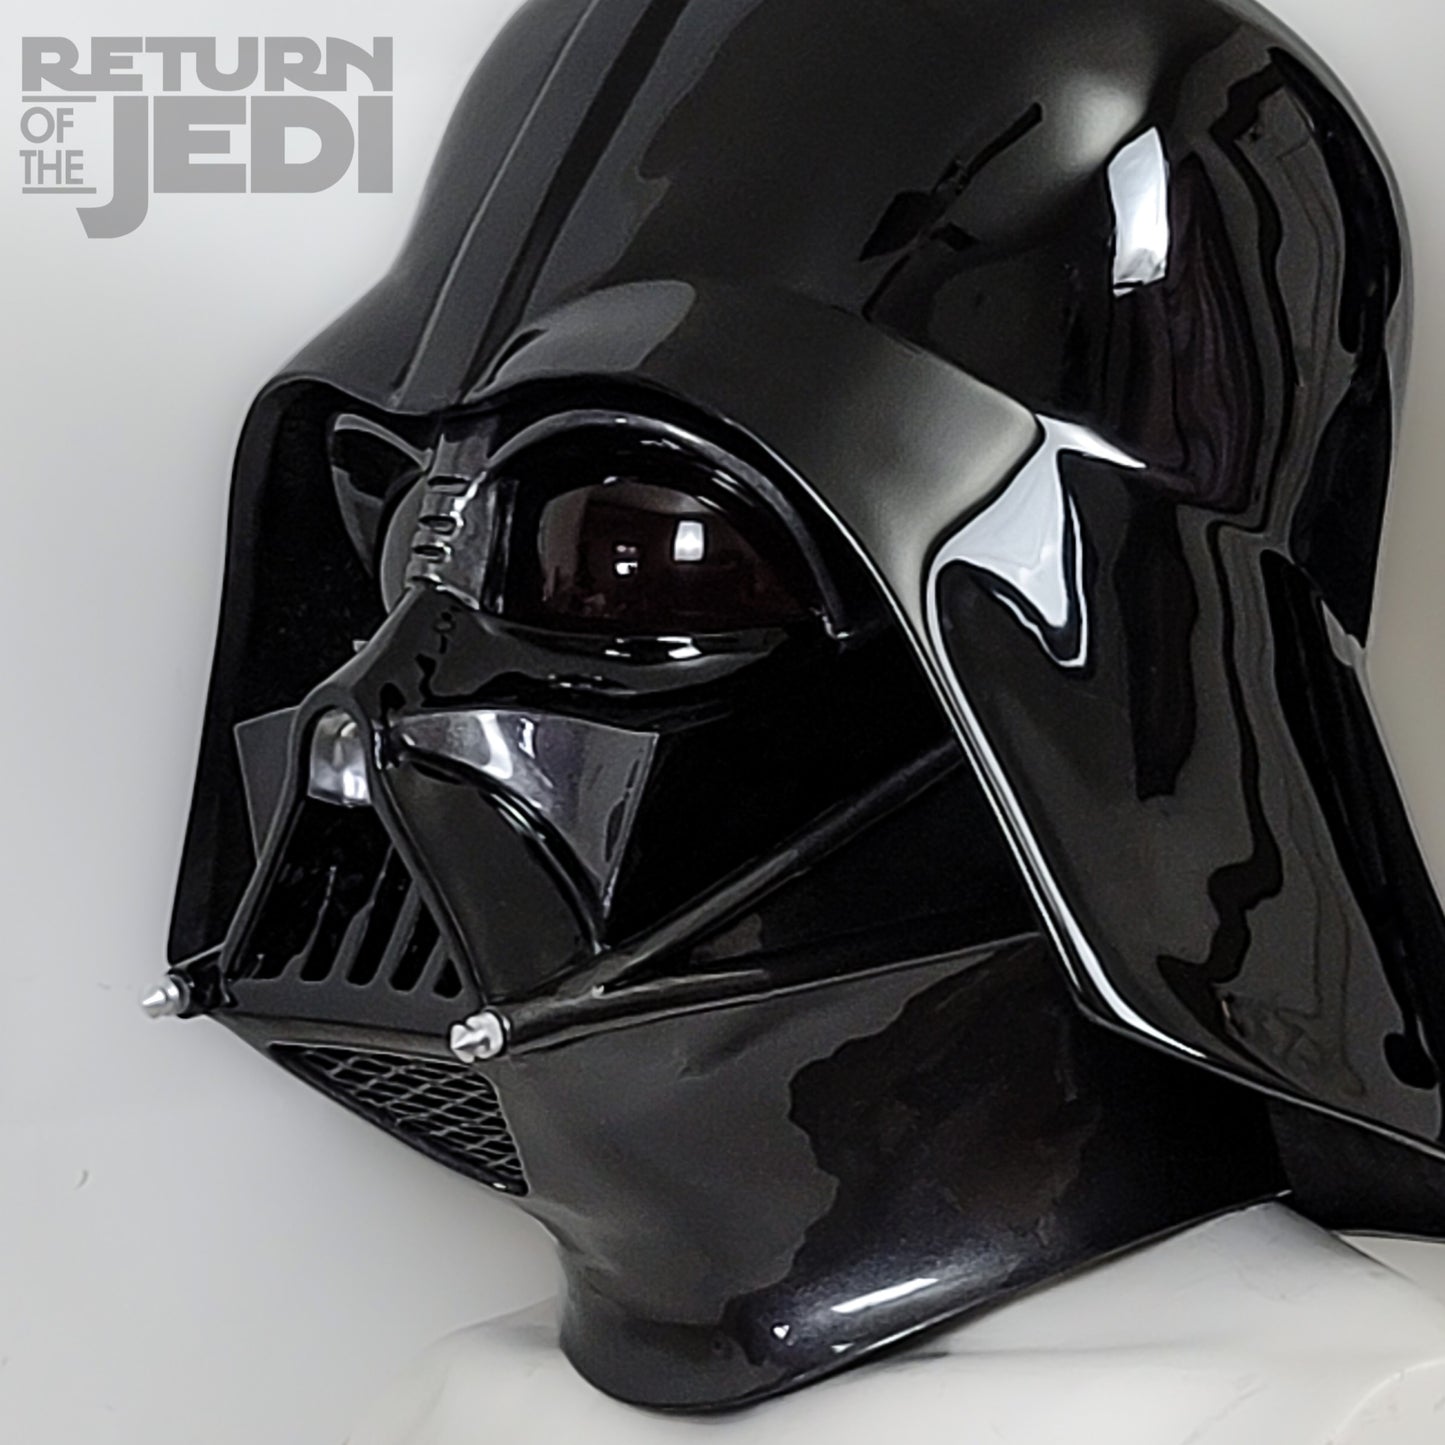 Return Of The Jedi Helmet (SALE)